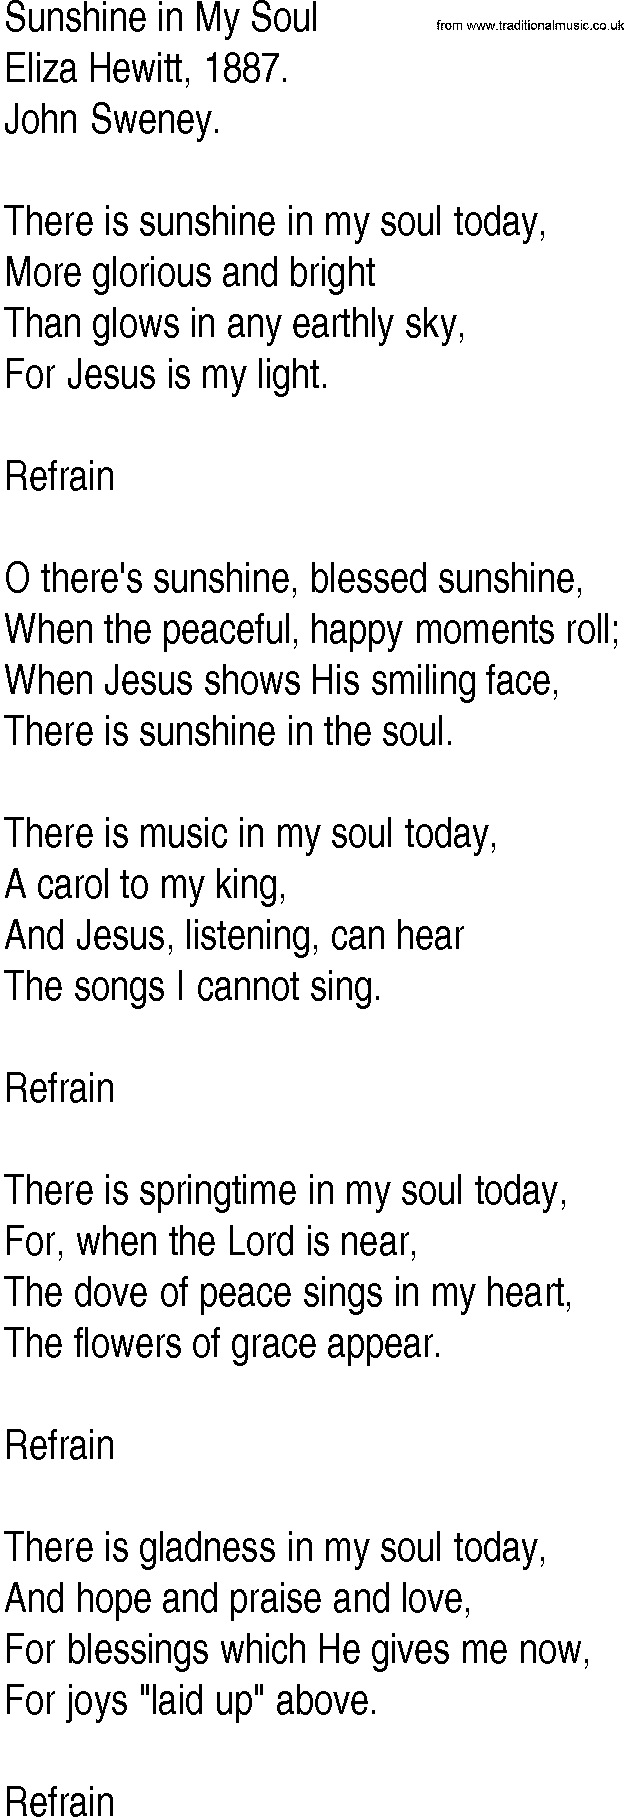 Hymn and Gospel Song: Sunshine in My Soul by Eliza Hewitt lyrics